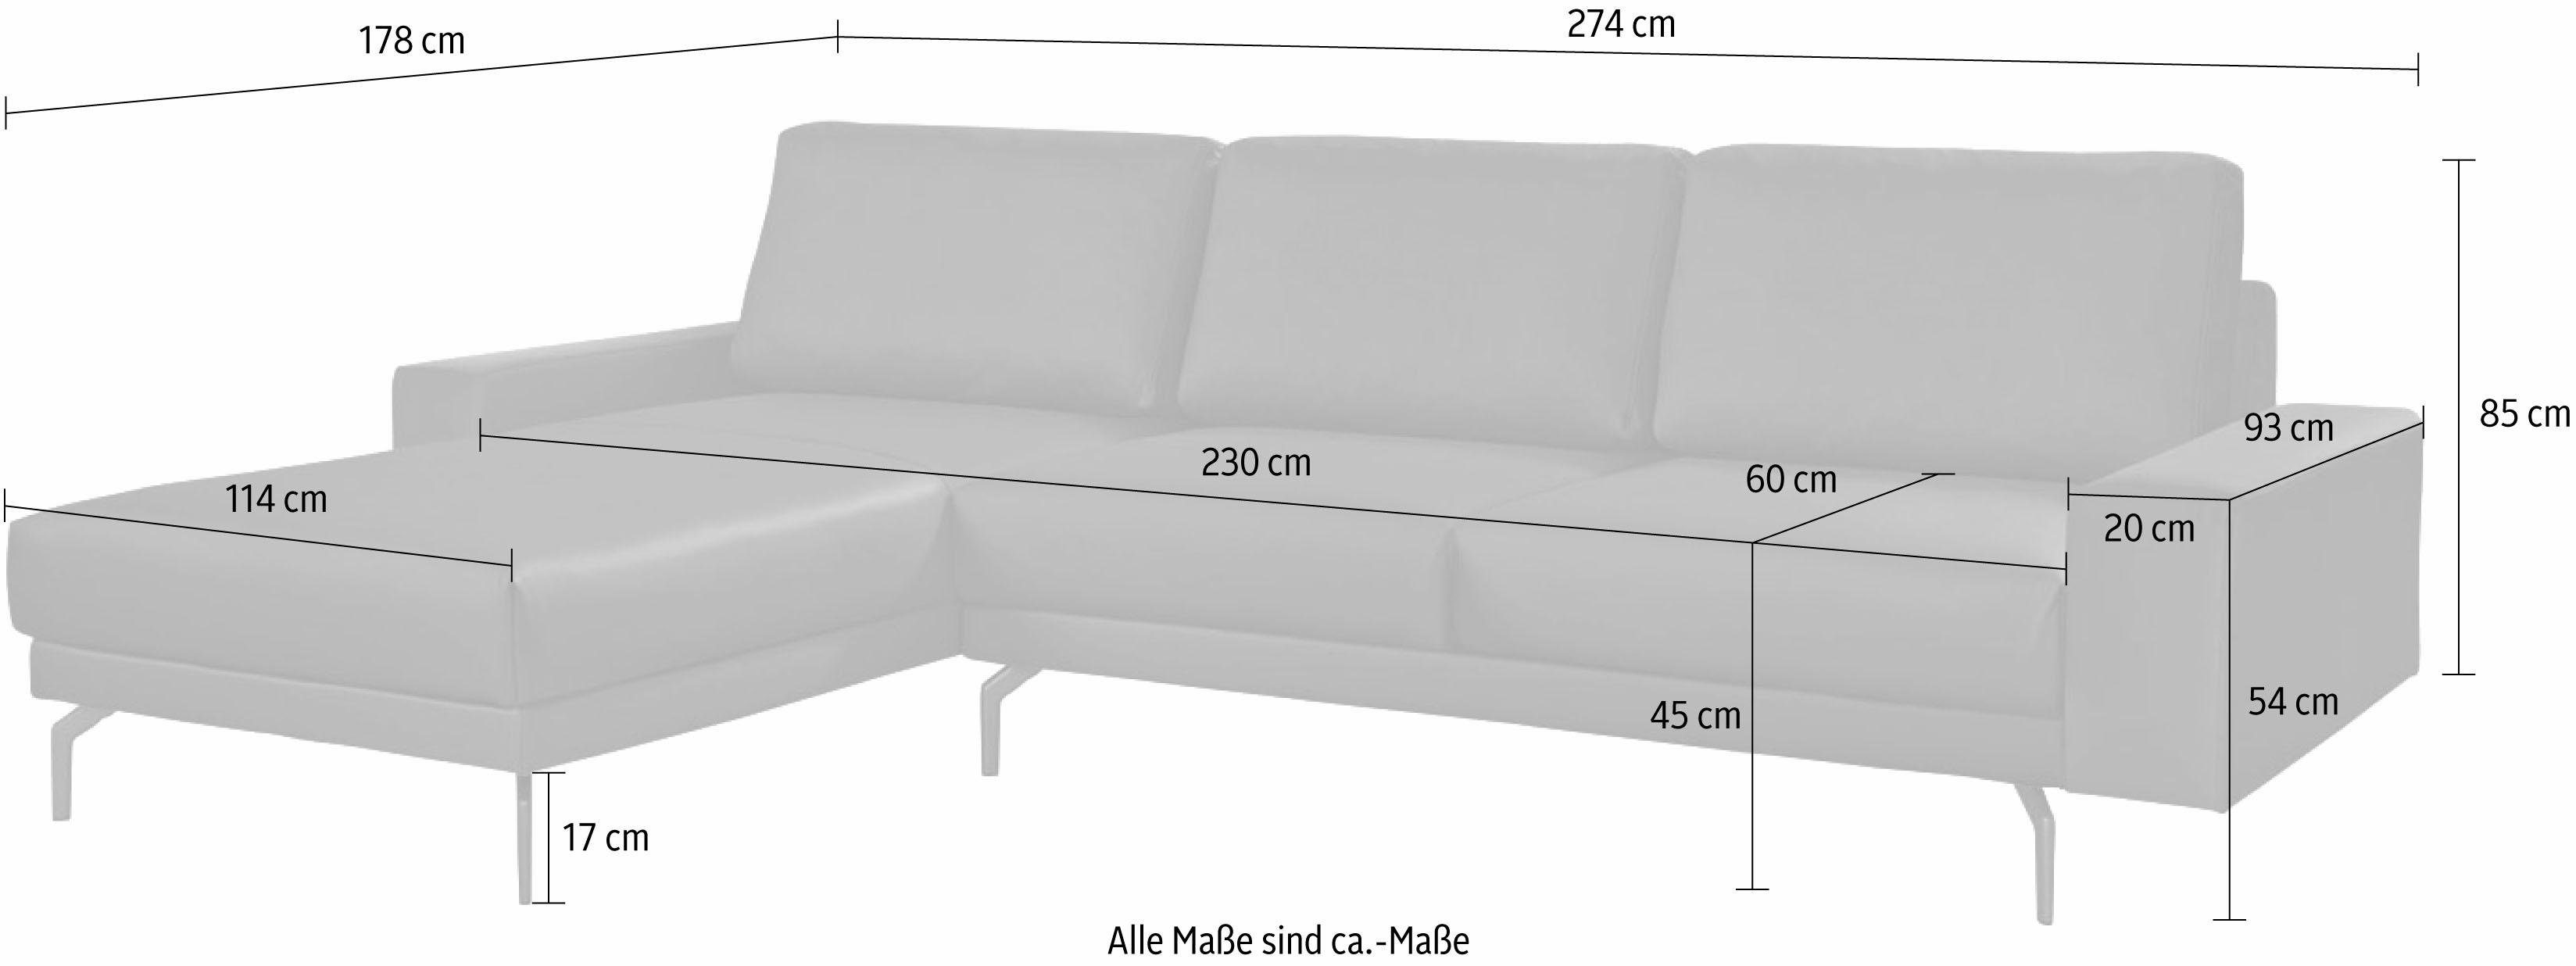 hülsta sofa Ecksofa hs.450, Armlehne niedrig, Breite 274 Alugussfüße breit umbragrau, in cm und